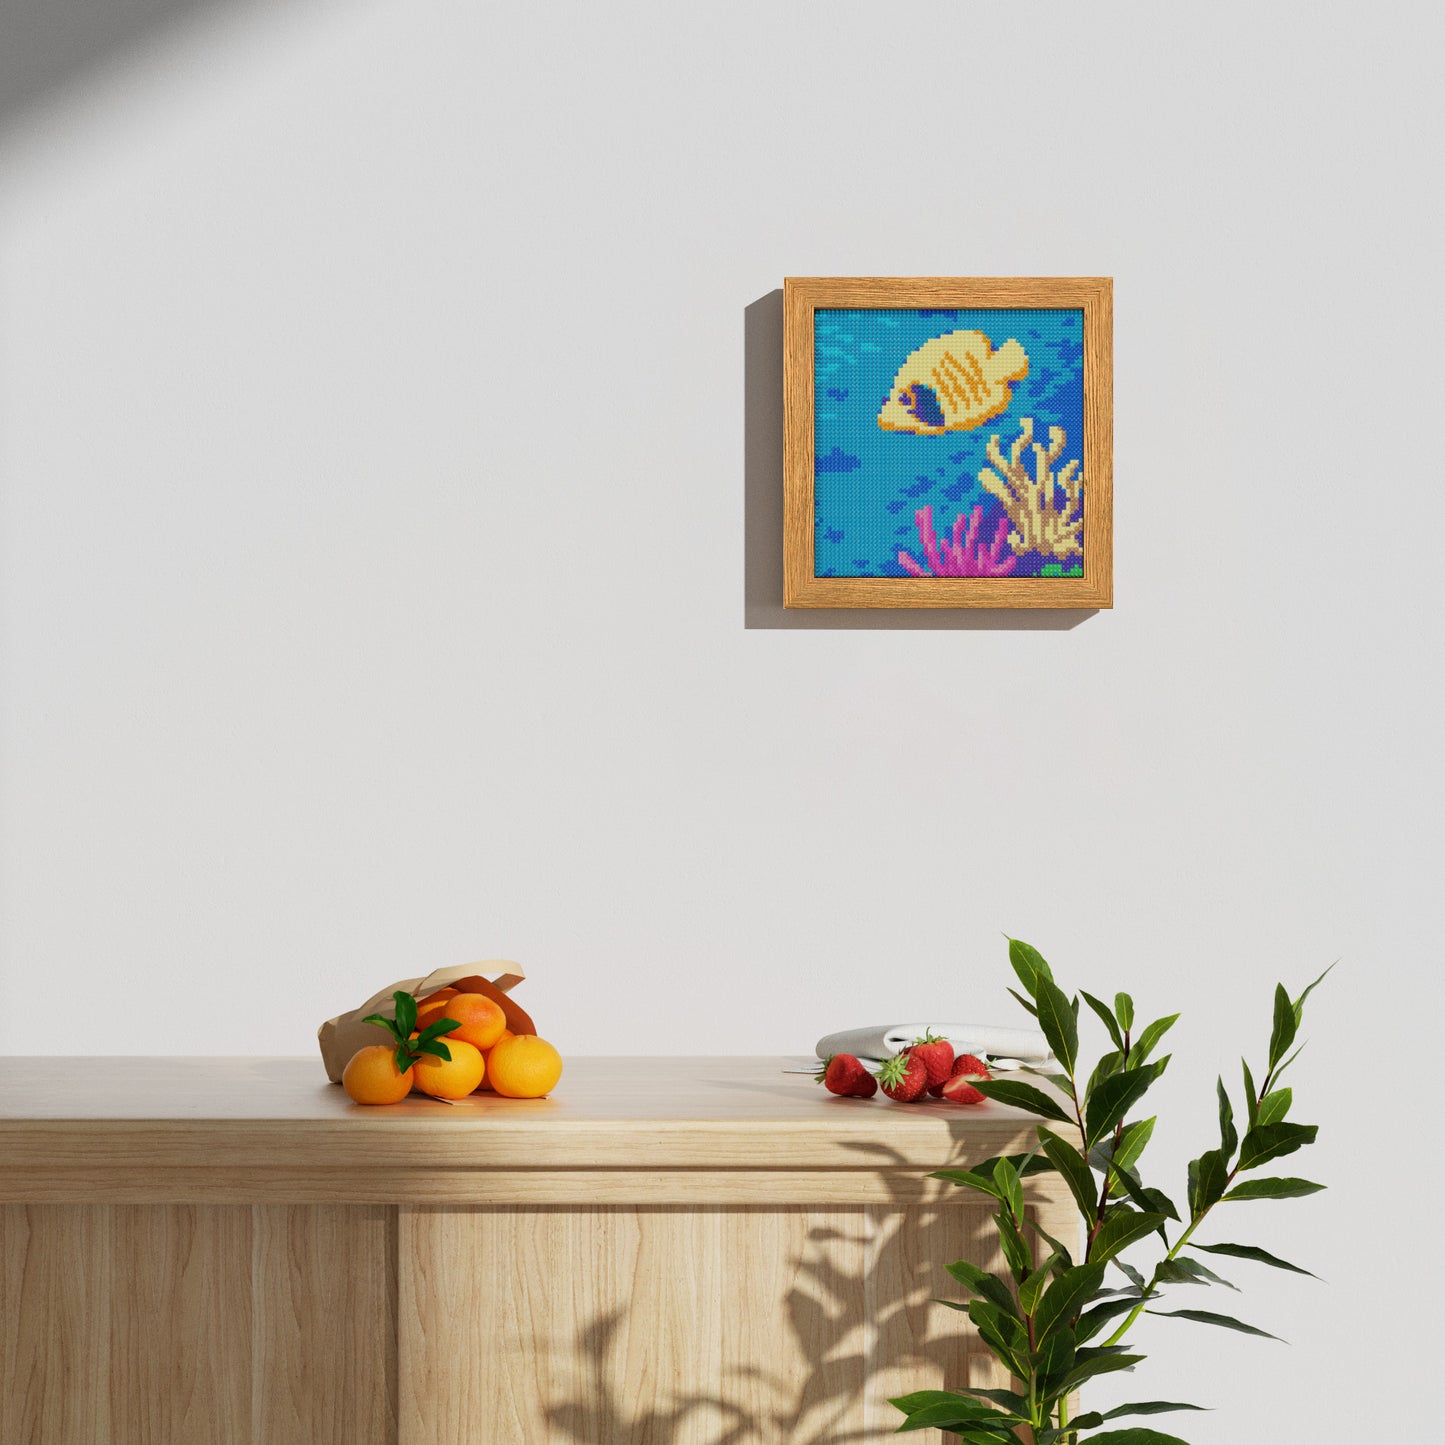 64x64 Pixel "Tropical Fish" Diamond Painting Cross Stitch Kit